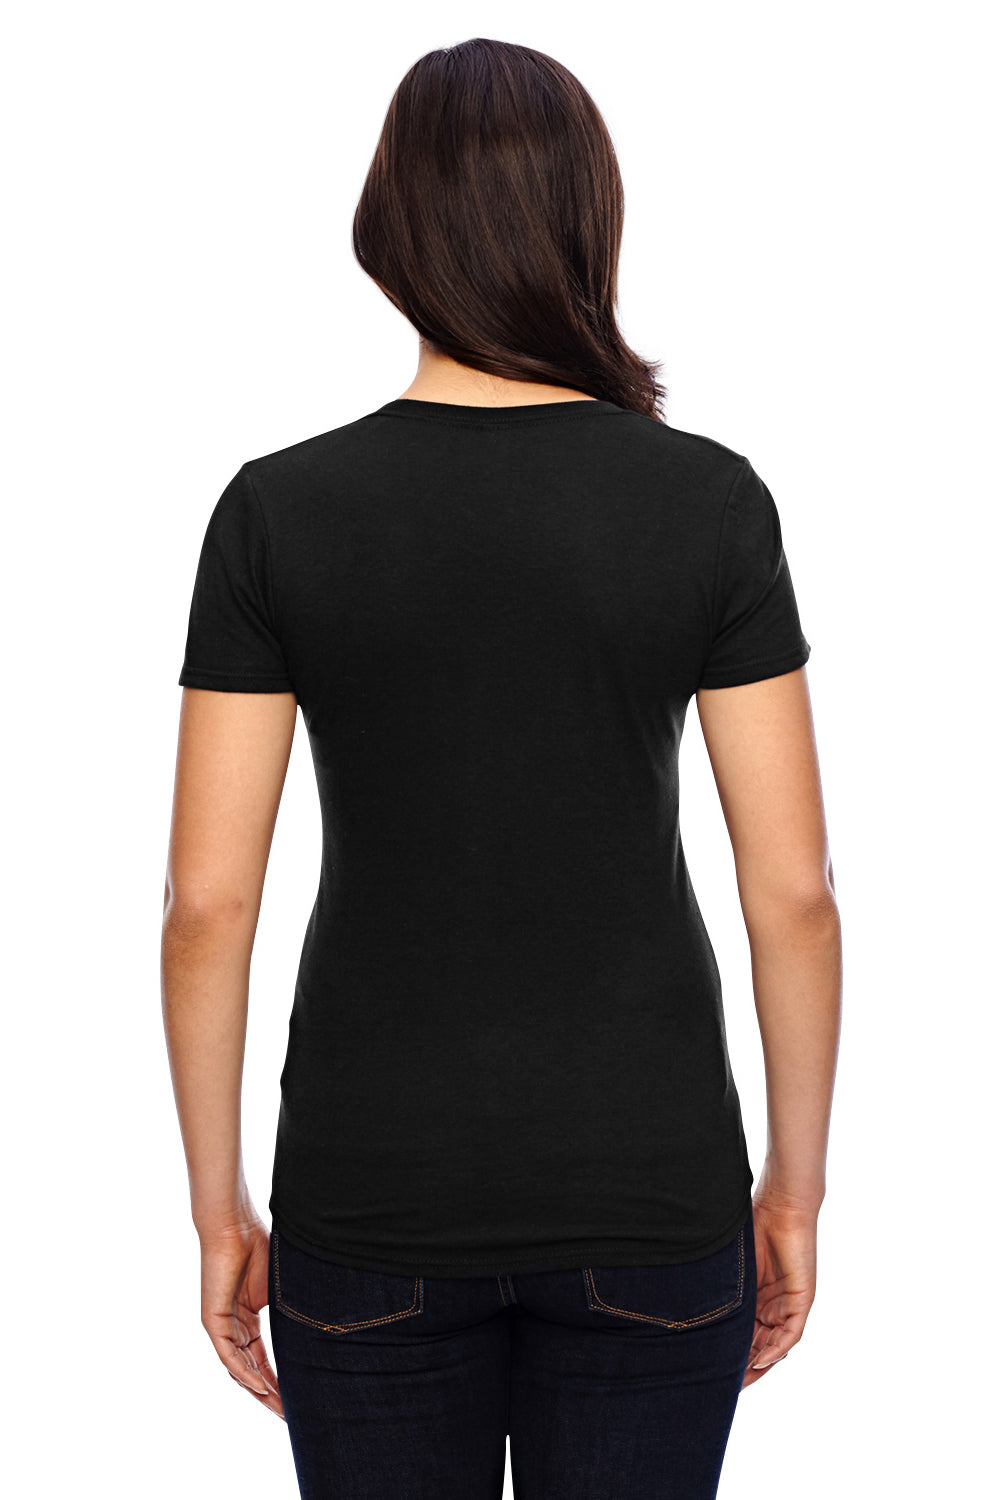 Anvil 6750L Womens Short Sleeve Crewneck T-Shirt Black Back